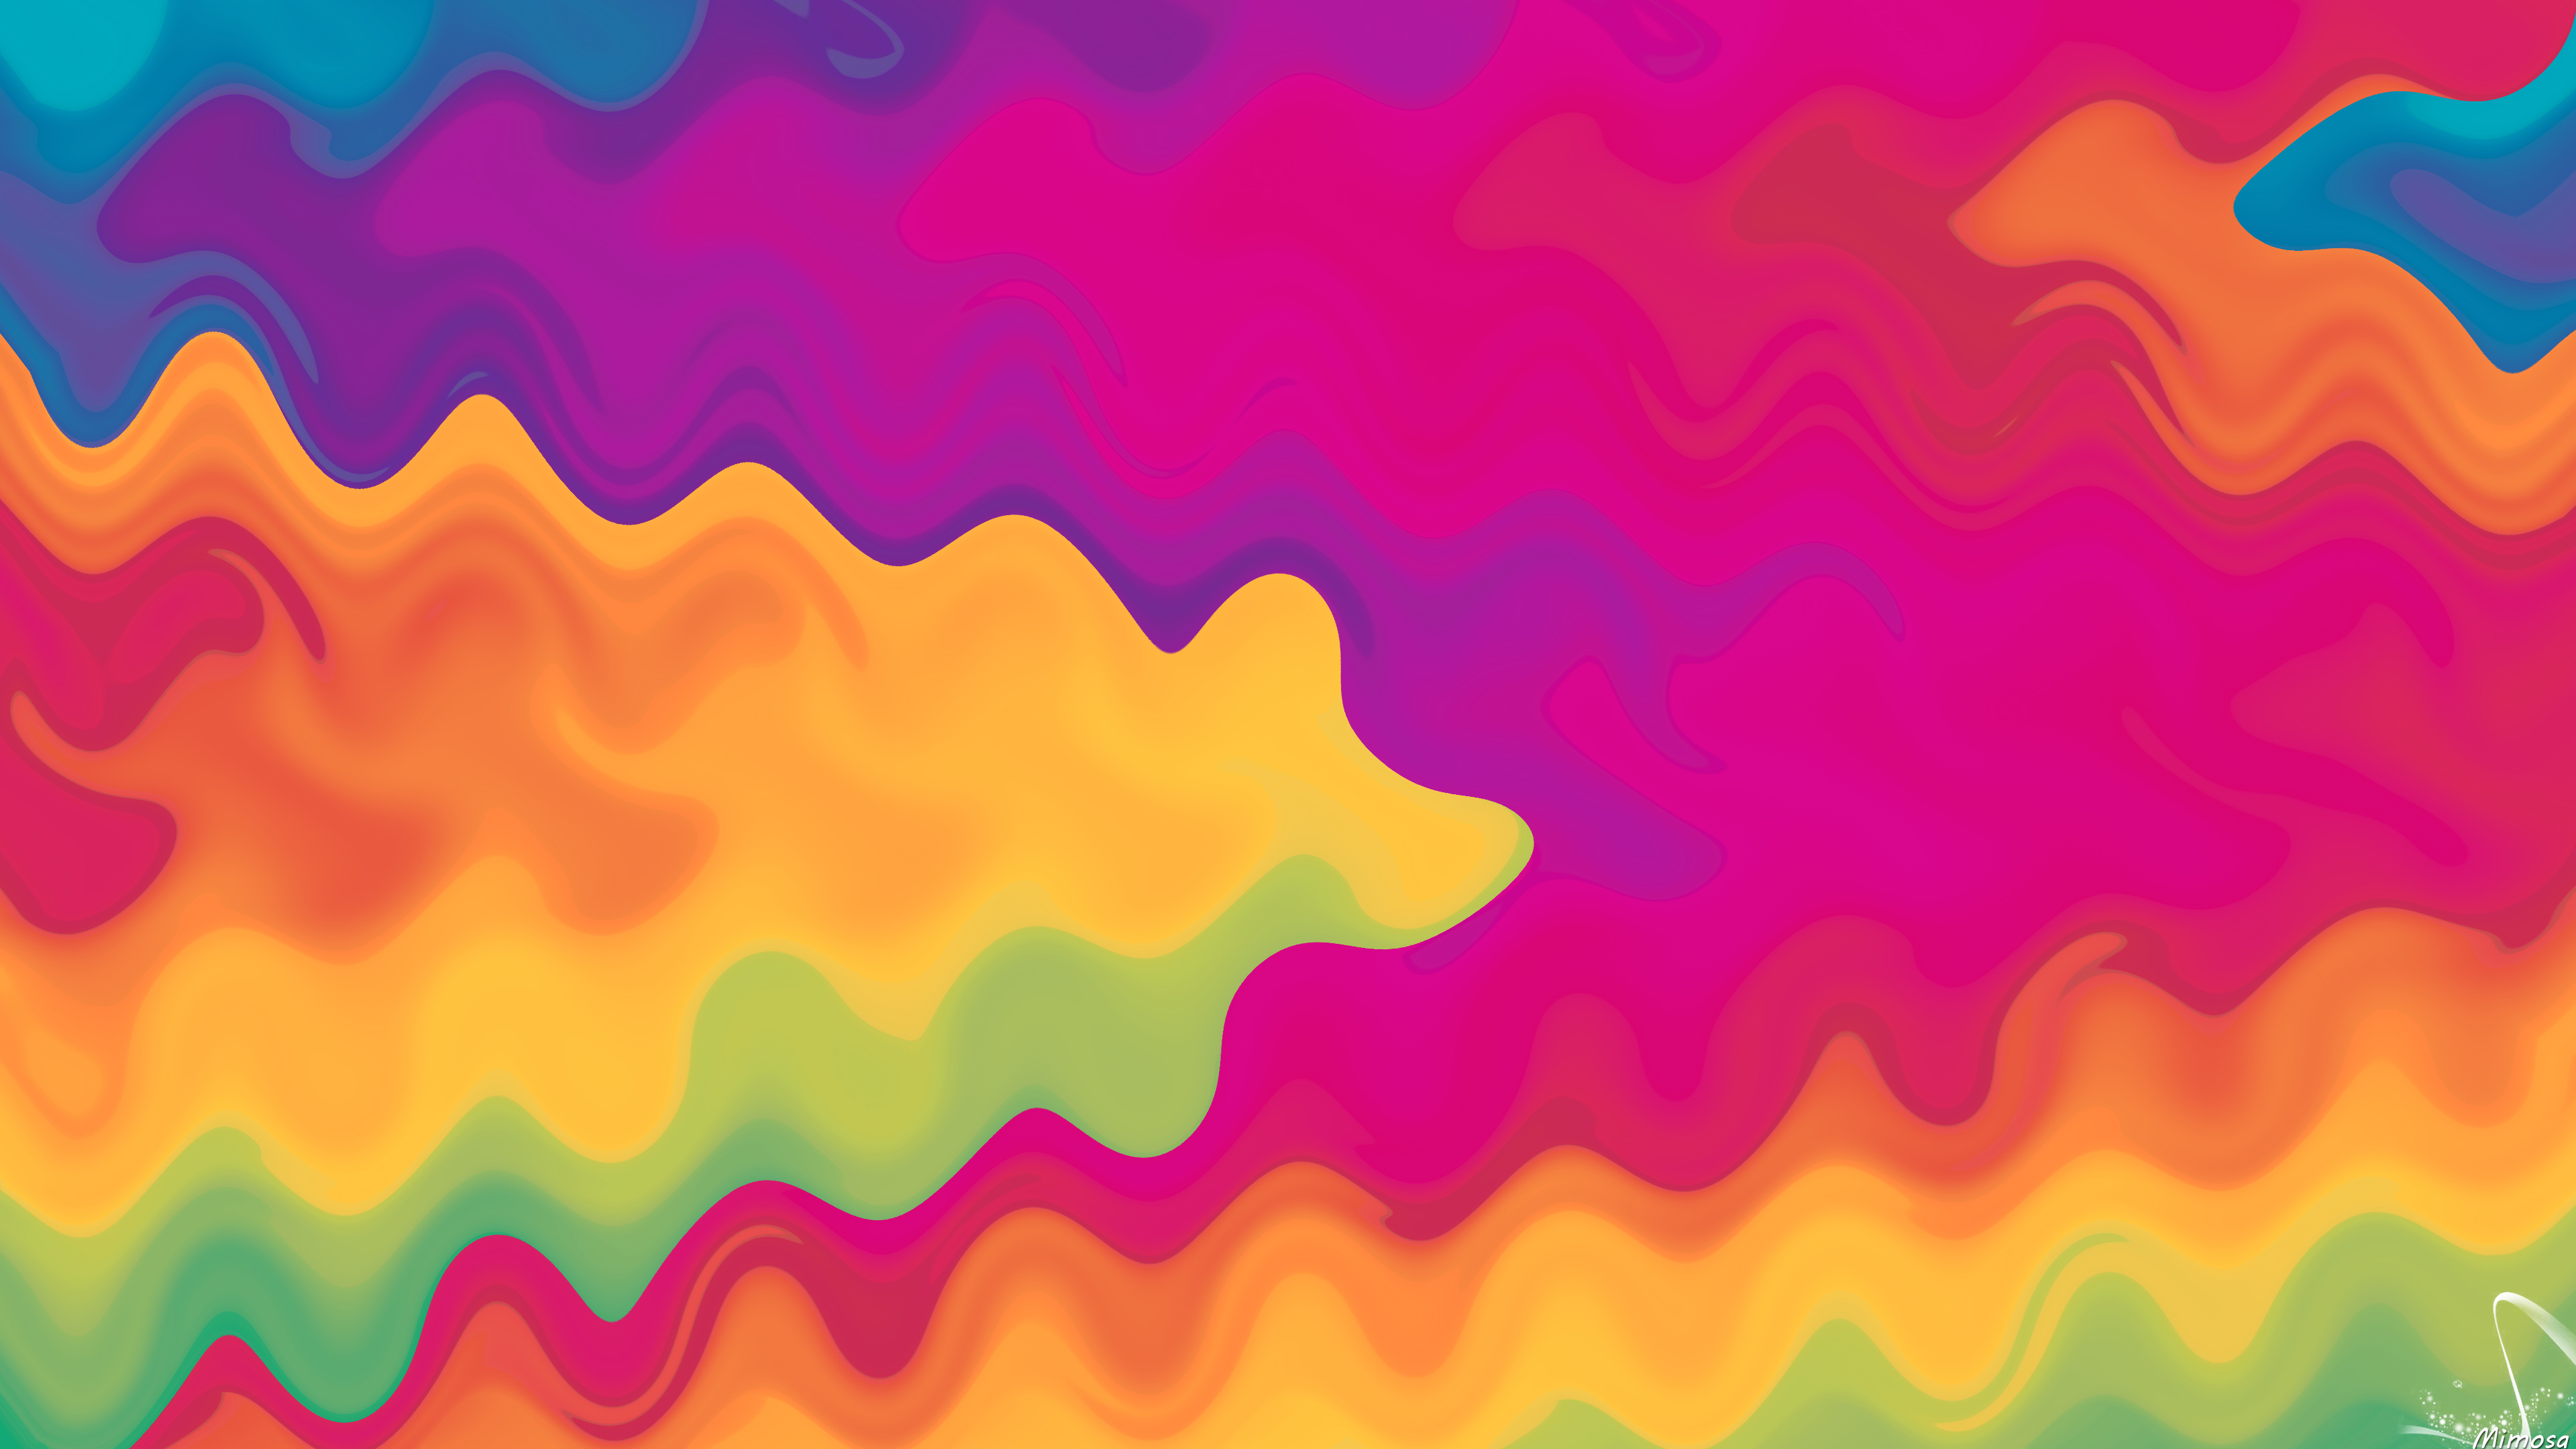 Gradient waves 4k Ultra HD Wallpaper. Background Image